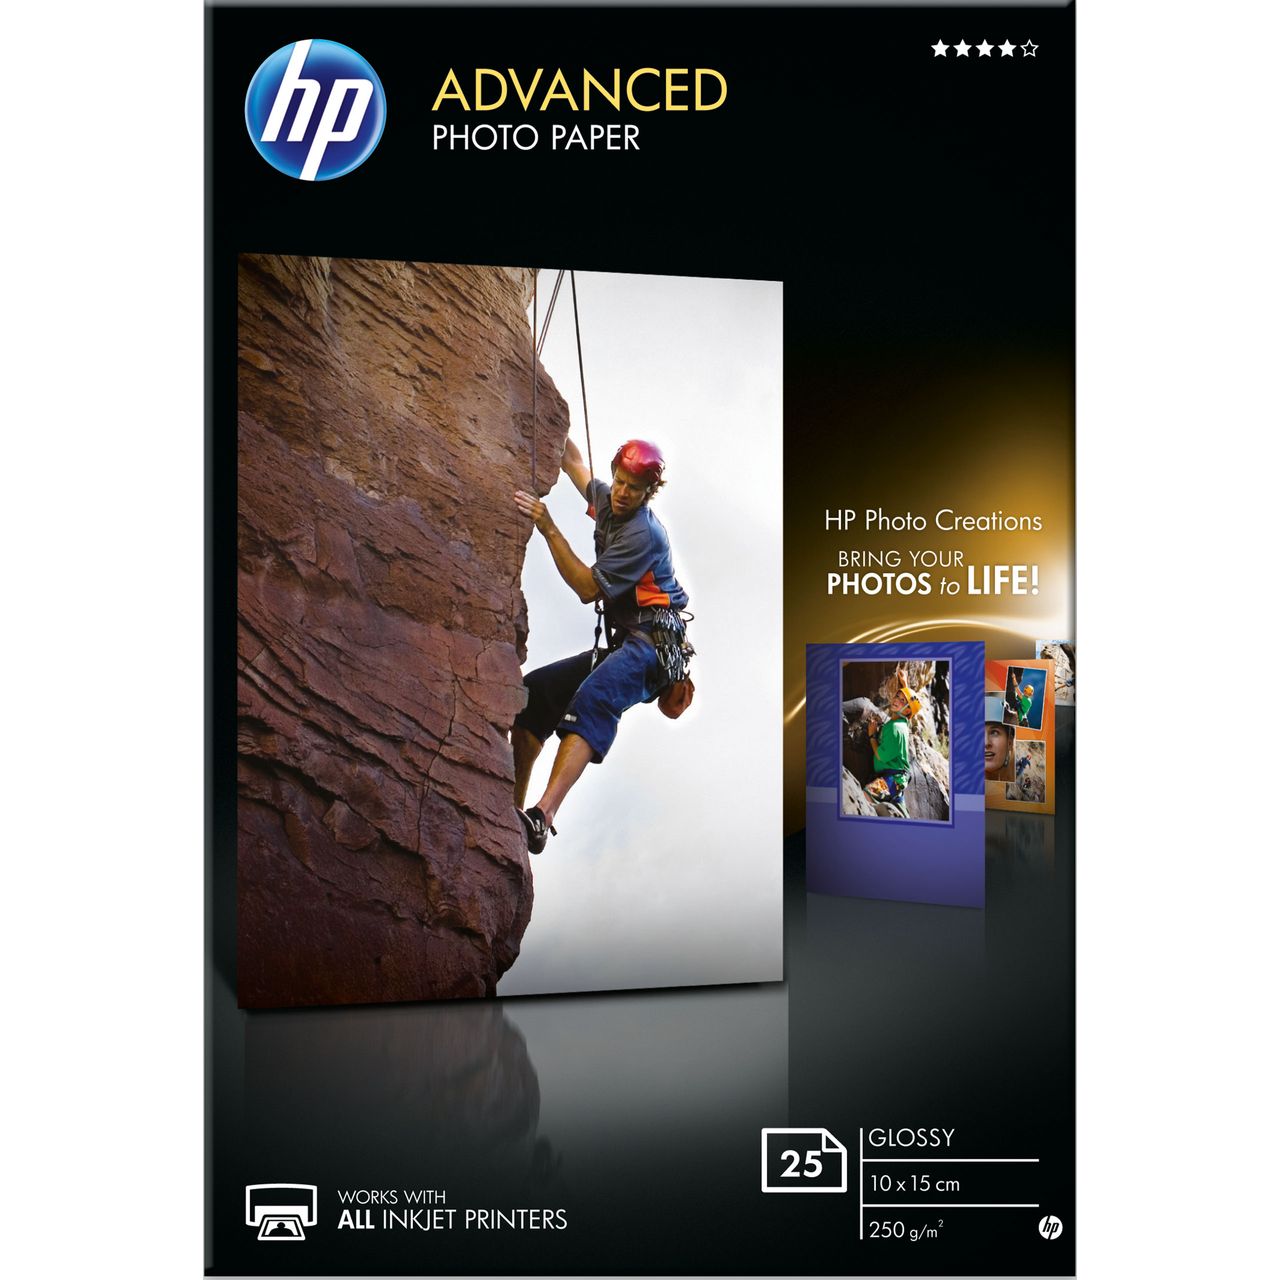 HP Advanced Glossy Photo Paper-25 sht/10 x 15 cm Review